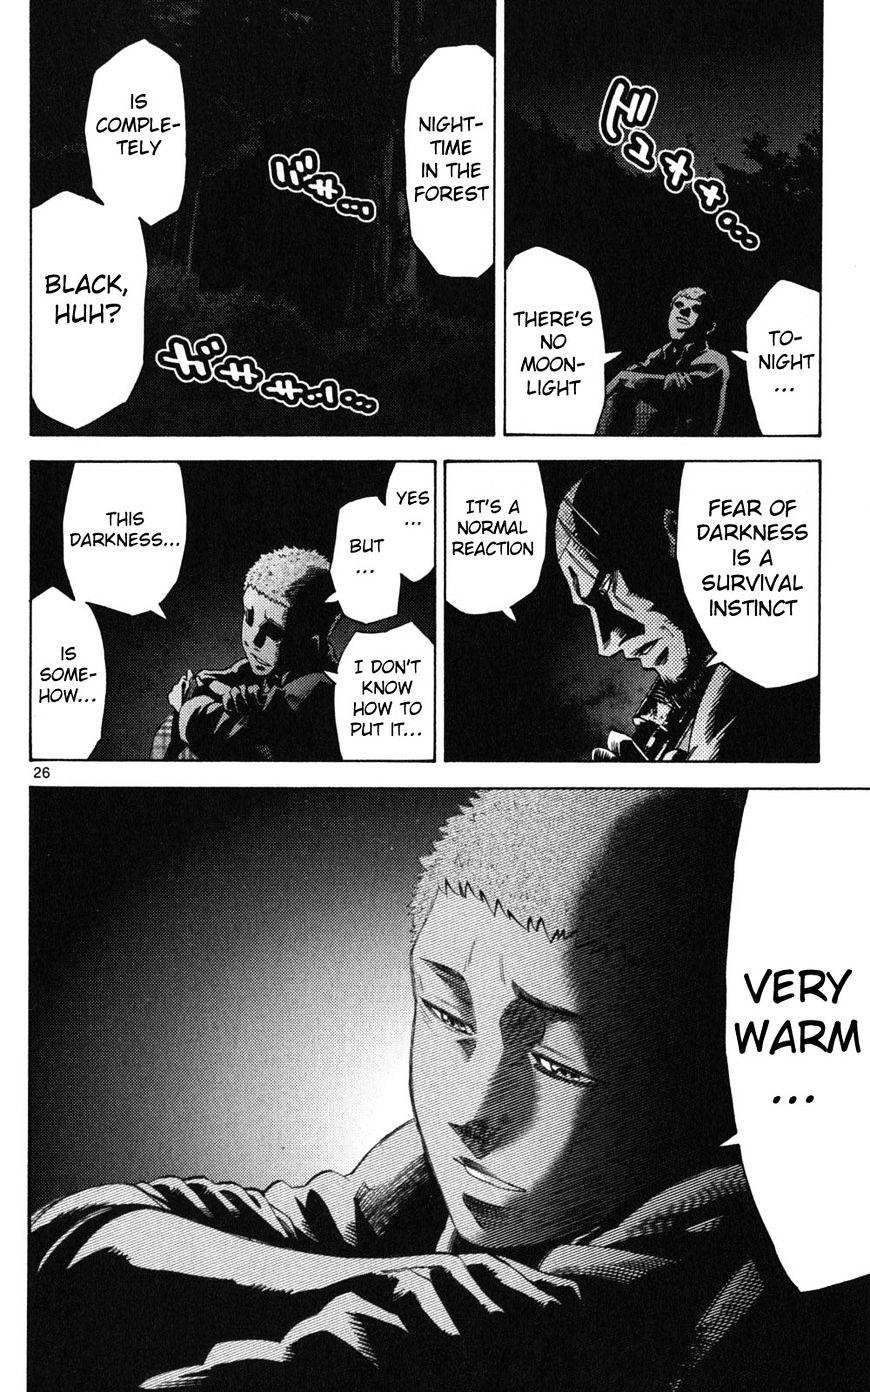 Imawa No Kuni No Alice Chapter 49.2 : Side Story 5 - King Of Spades (2) page 26 - Mangakakalot